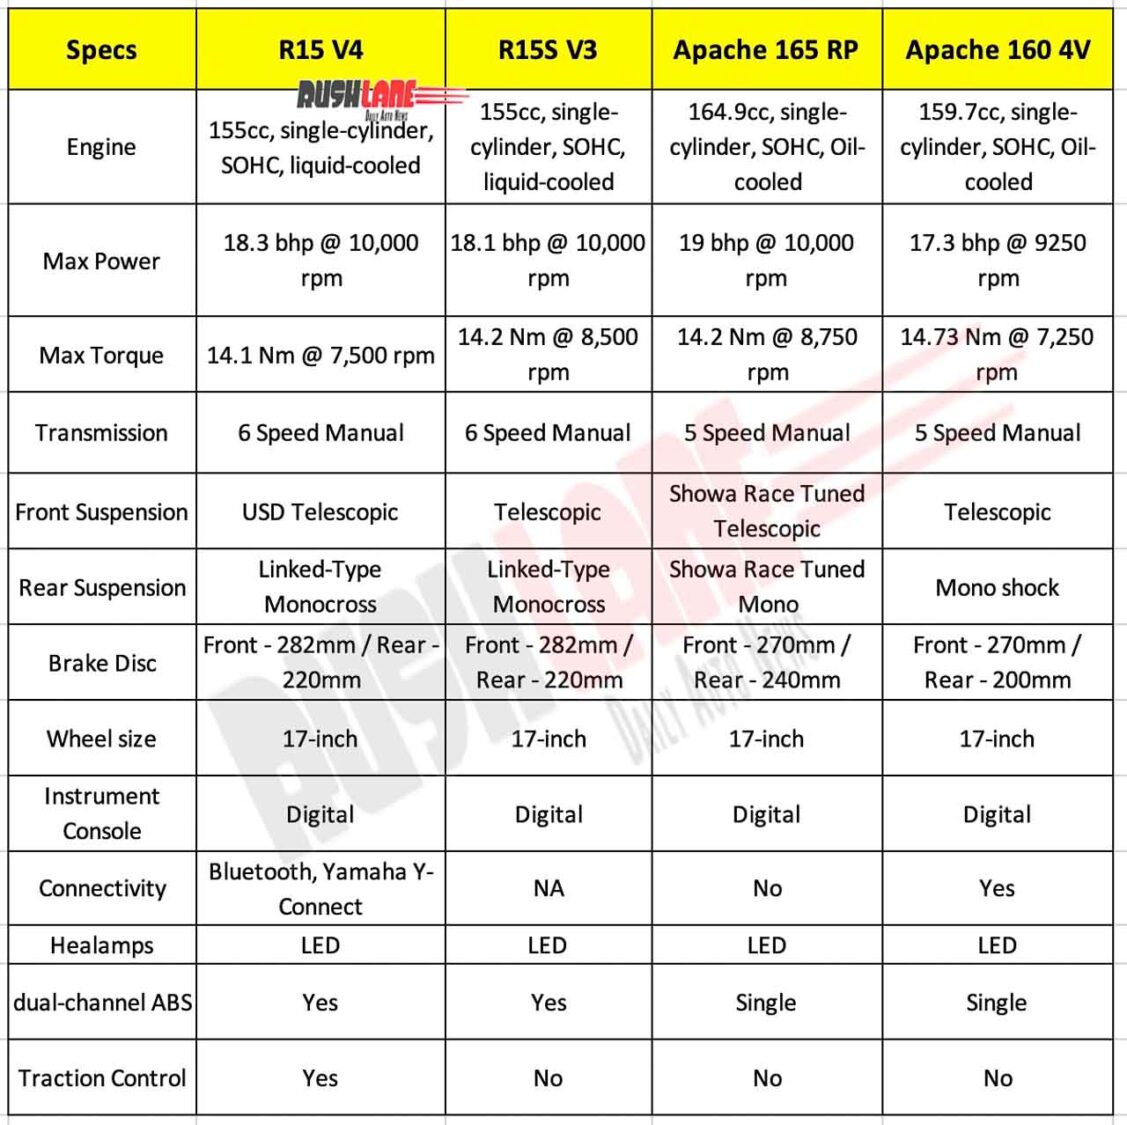 New TVS Apache 165 RP vs Apache 160 vs Yamaha R15 V4 Vs R15 S